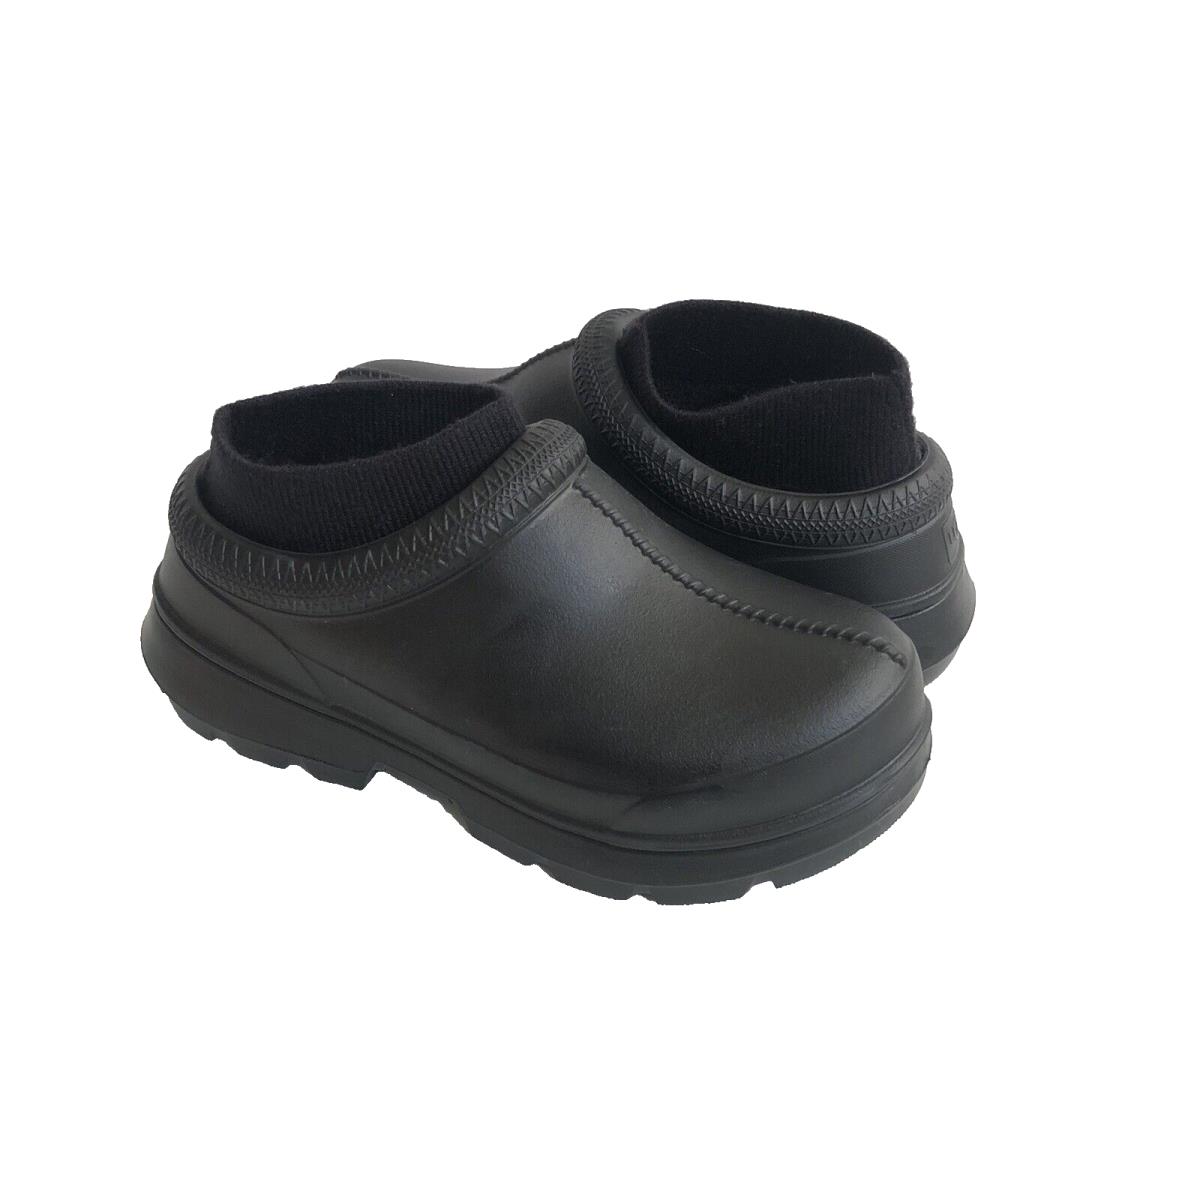 Ugg Women Tasman X Black Slip ON Moccasin Shoes US 6 / EU 37 / UK 4